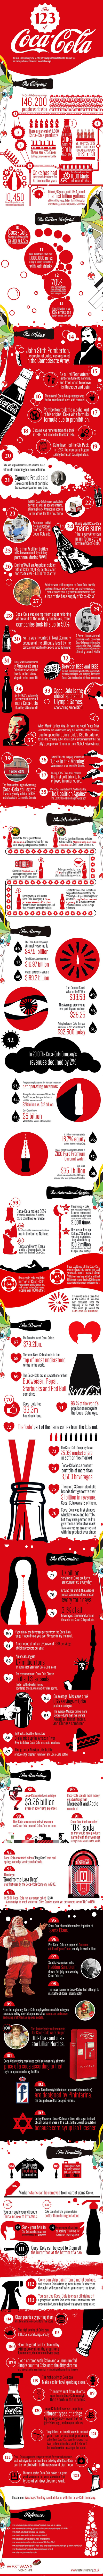 The-123-of-Coca-Cola-Infographic